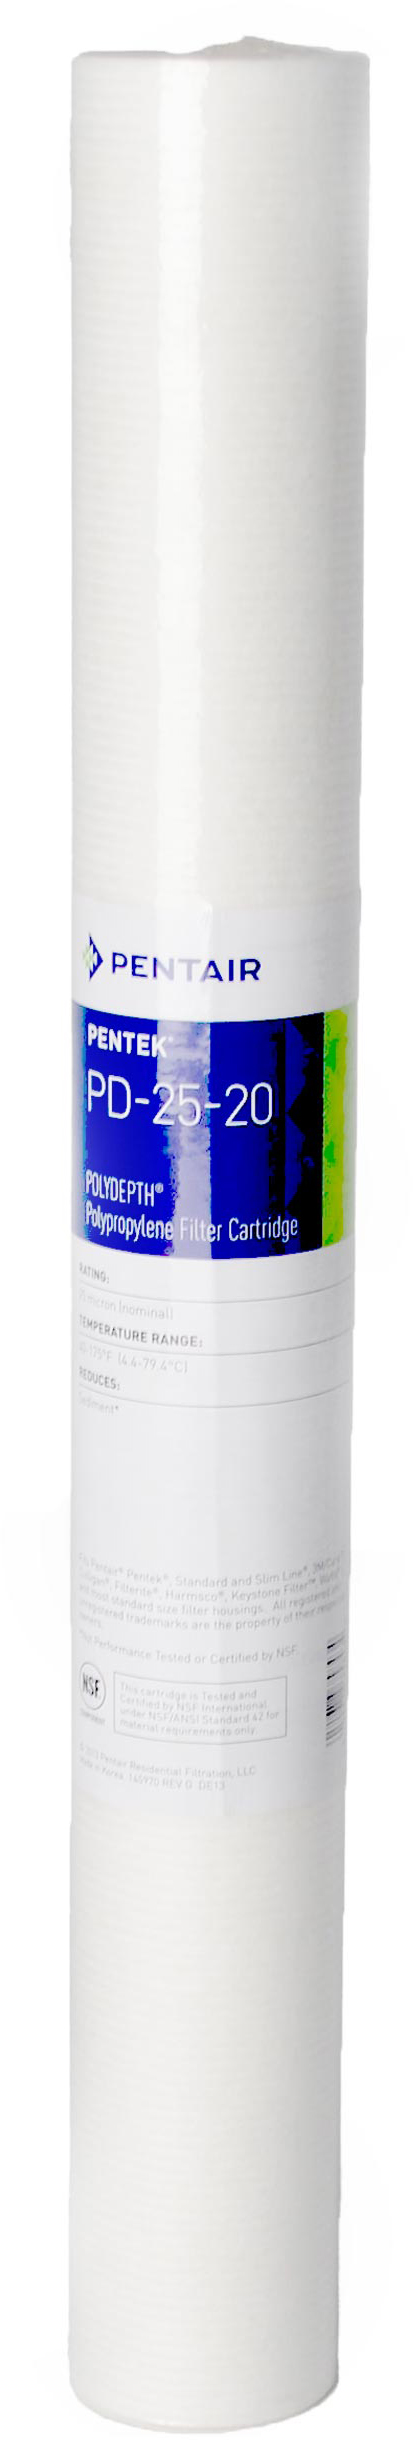 Pentek PD-5-20 Polydepth (155756-43)